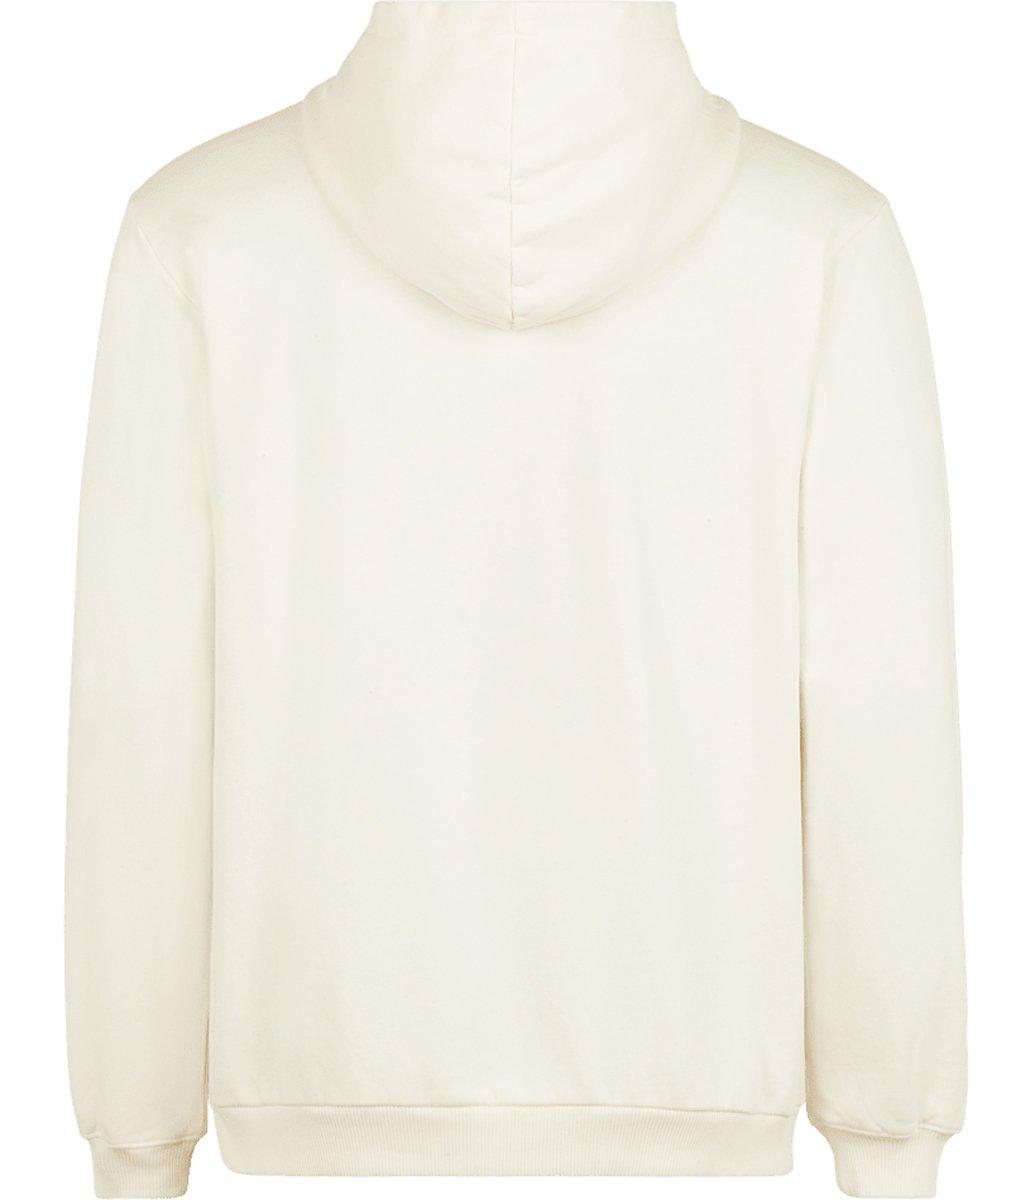 FILA  Sweat-shirt  Confortable à porter-BISCHKEK hoody 